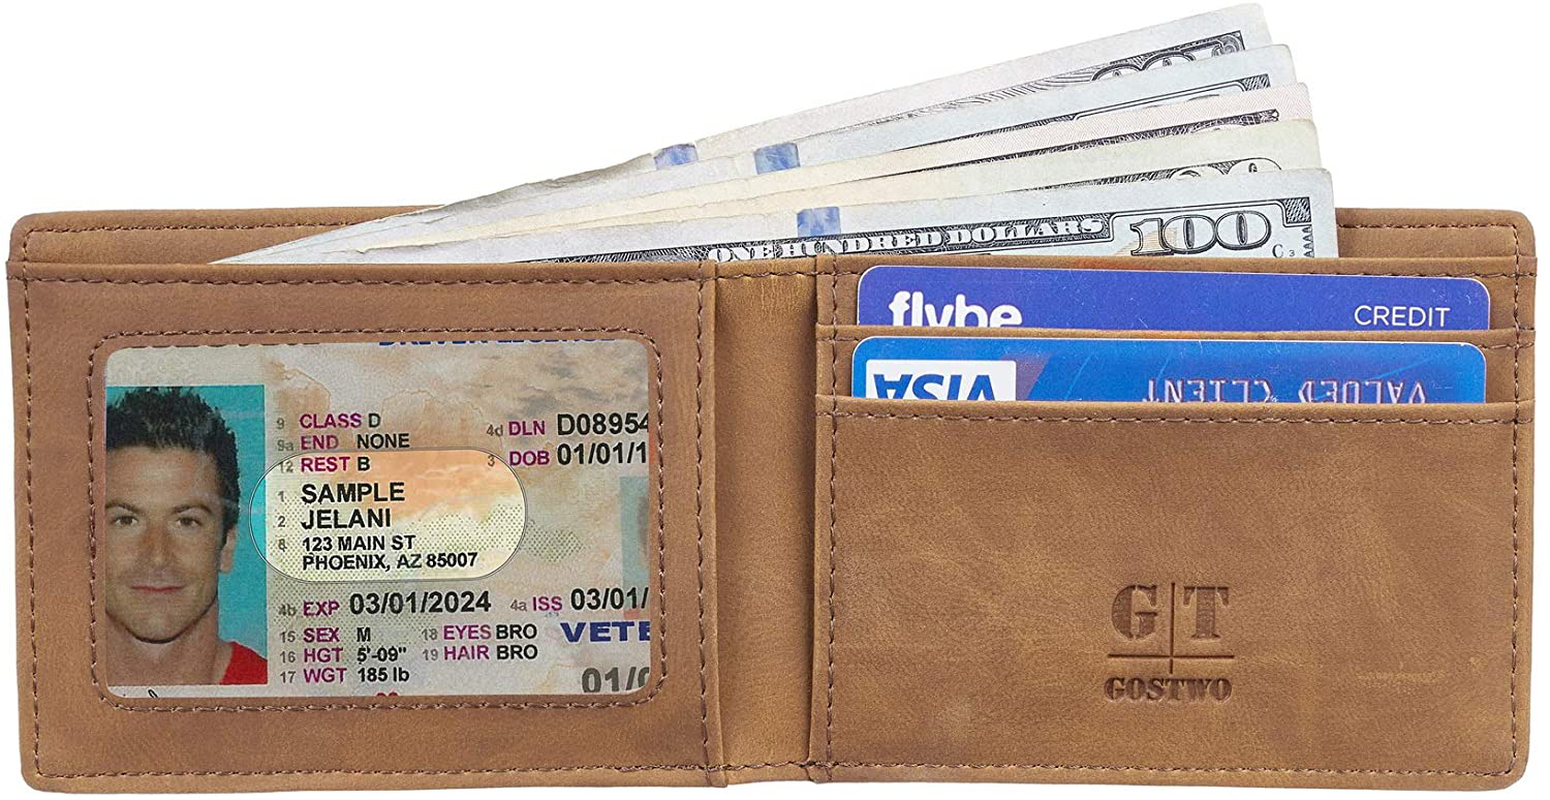  Gostwo Mens Slim Minimalist Front Pocket Wallet